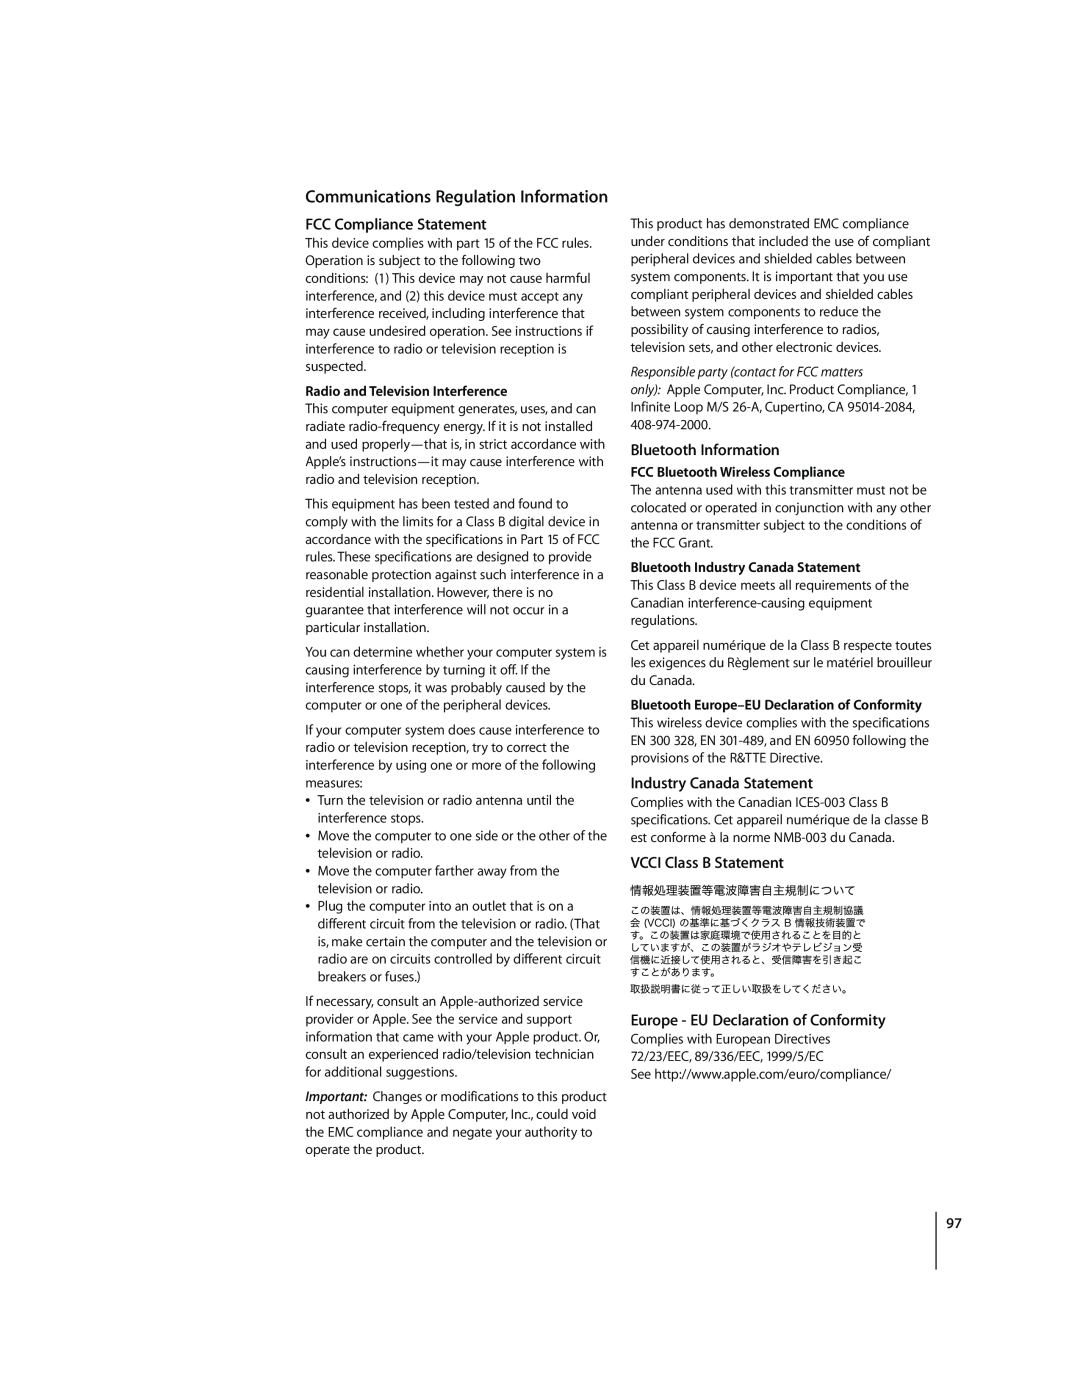 Apple G4 12 manual Communications Regulation Information FCC Compliance Statement, Bluetooth Information 